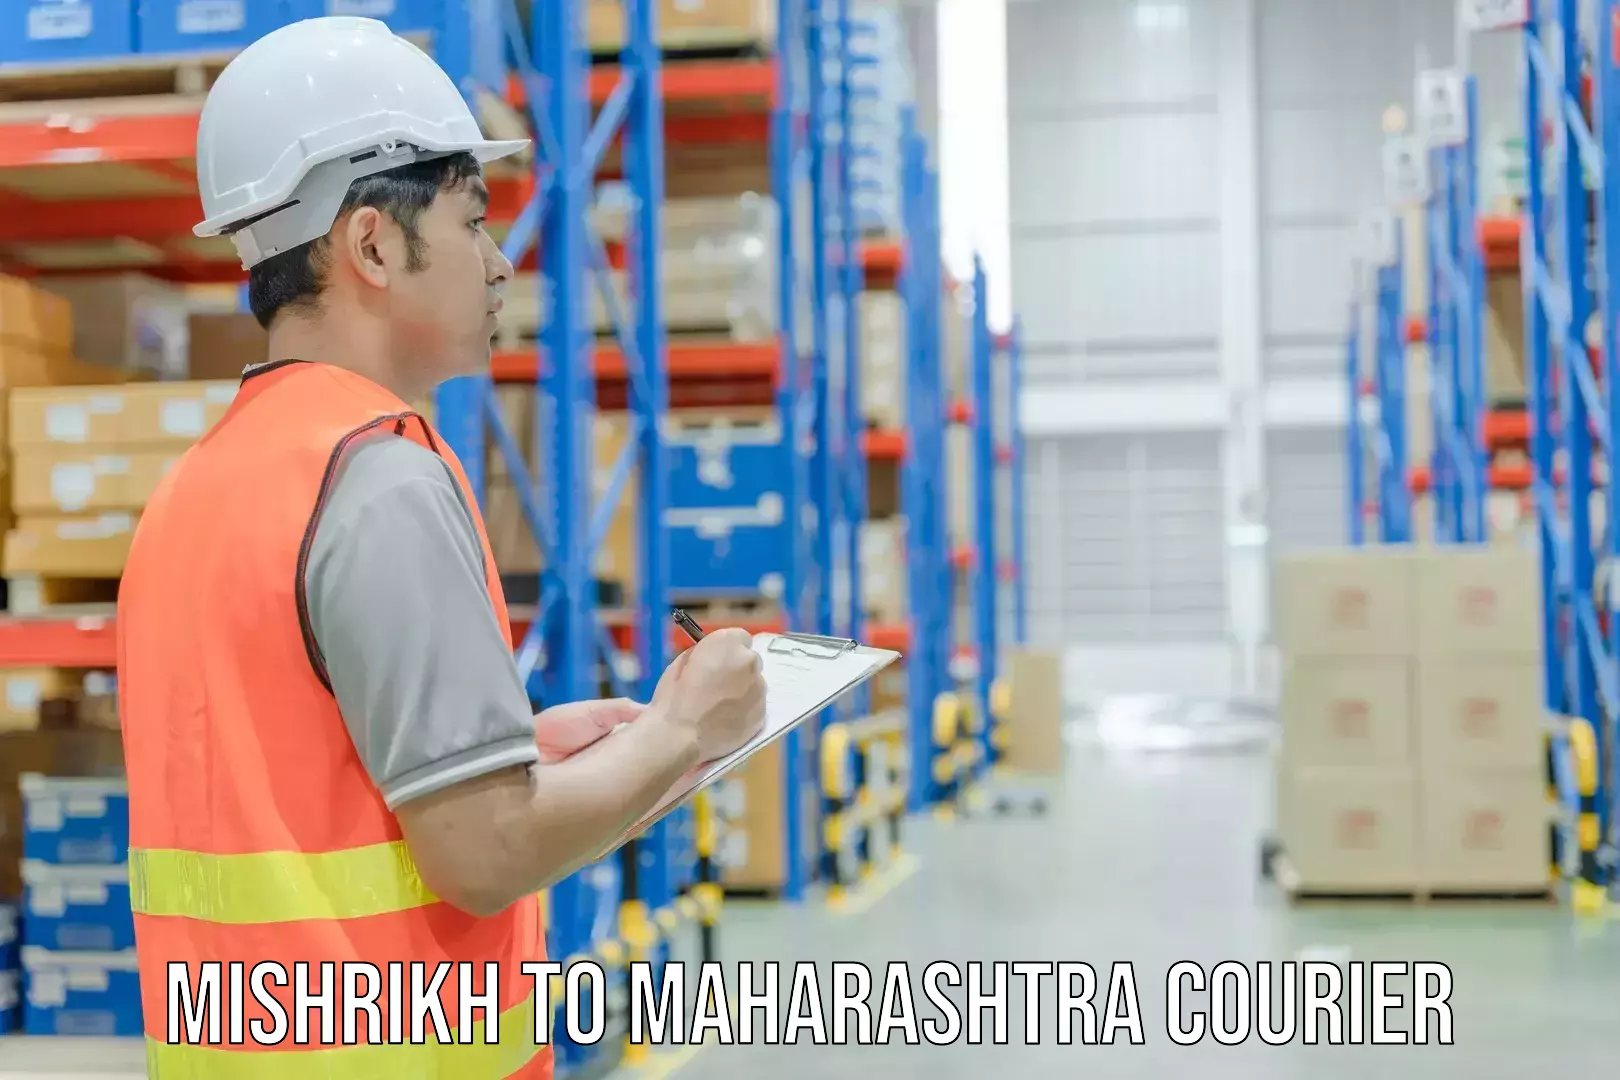 User-friendly delivery service Mishrikh to Maharashtra